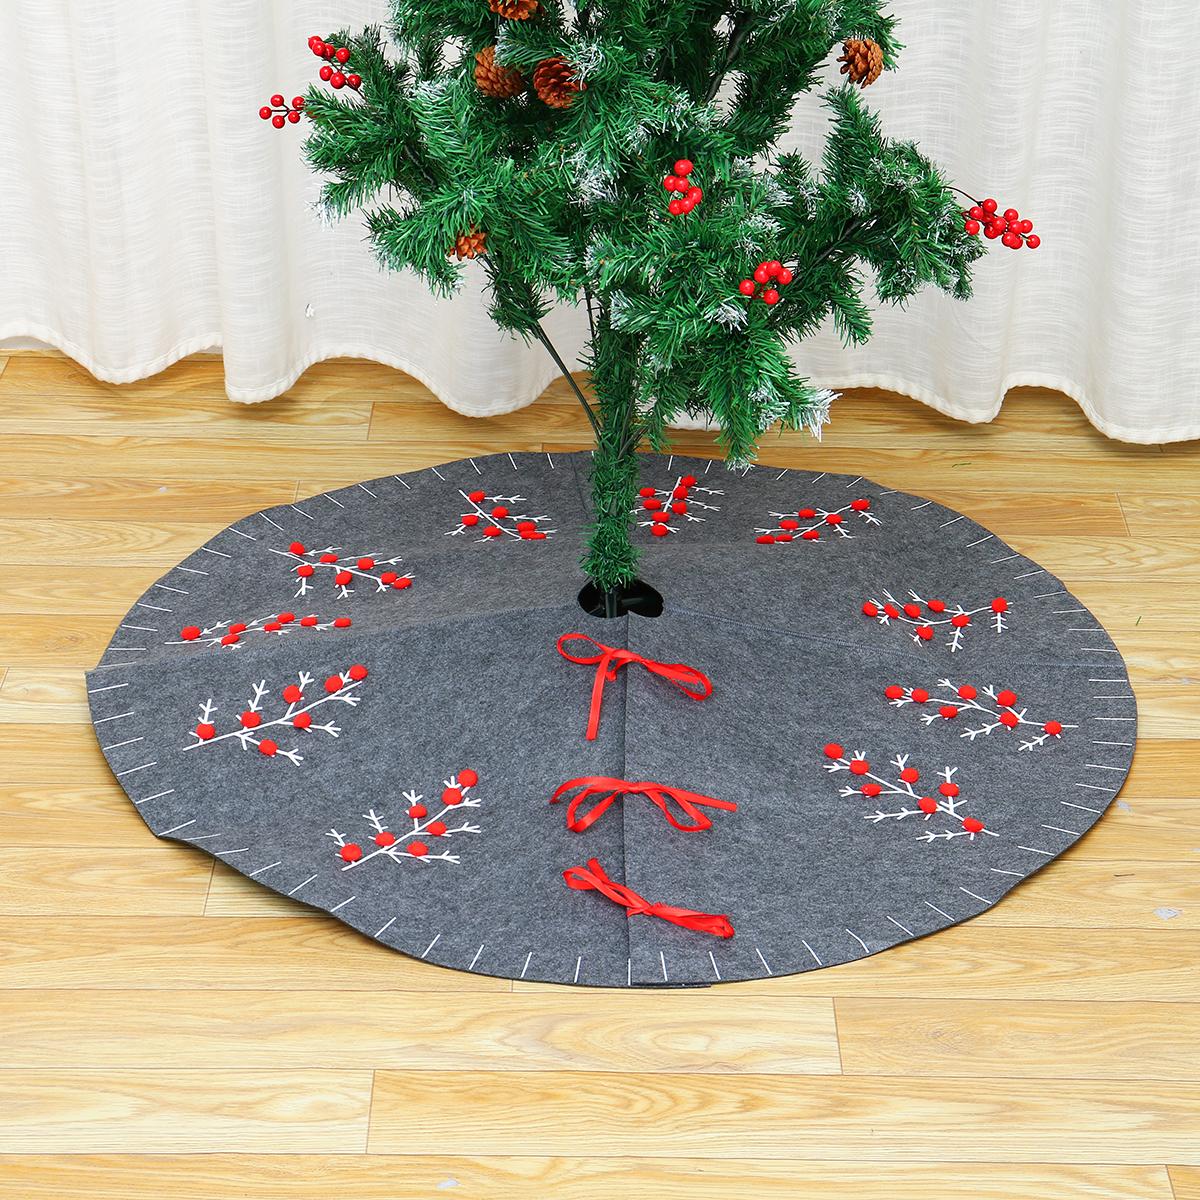 2020-Christmas-Decor-120cm-New-Year-Xmas-Tree-Carpet-Foot-Cover-Christmas-Tree-Skirt-Aprons-for-Home-1770953-10